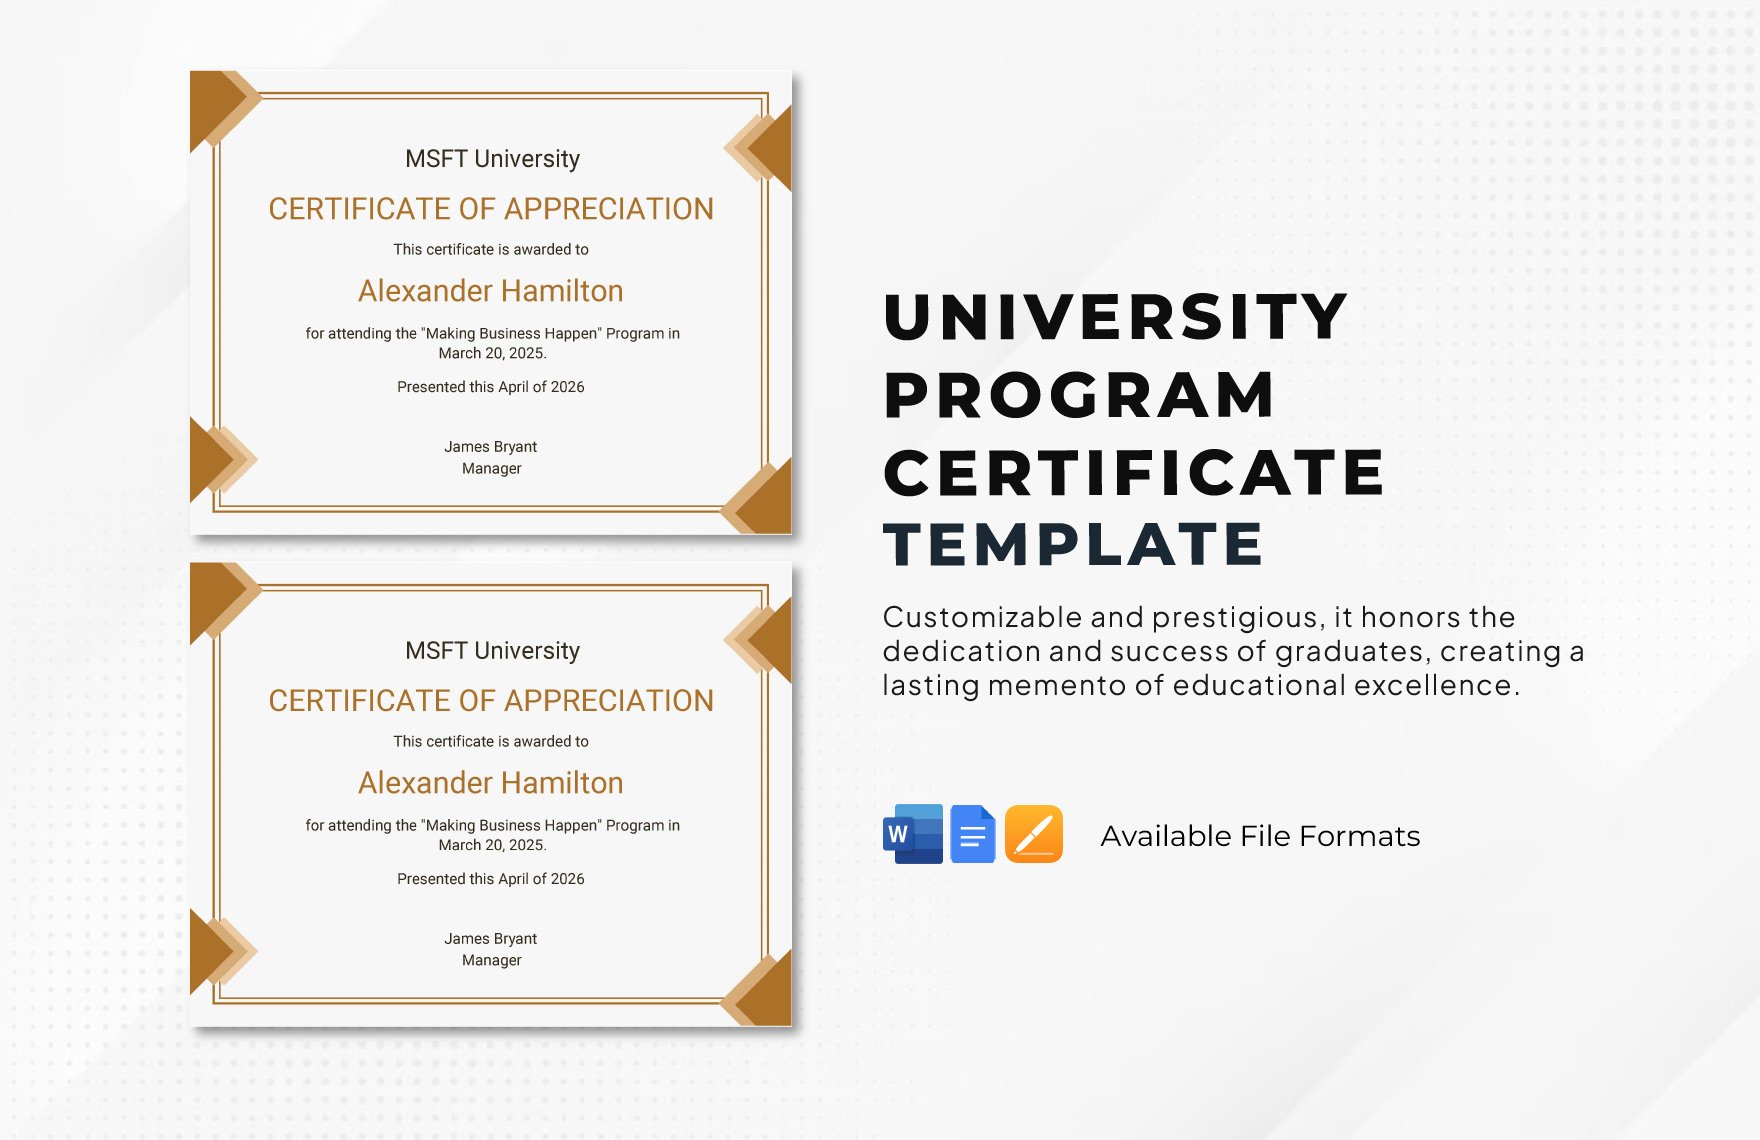 University Program Certificate Template